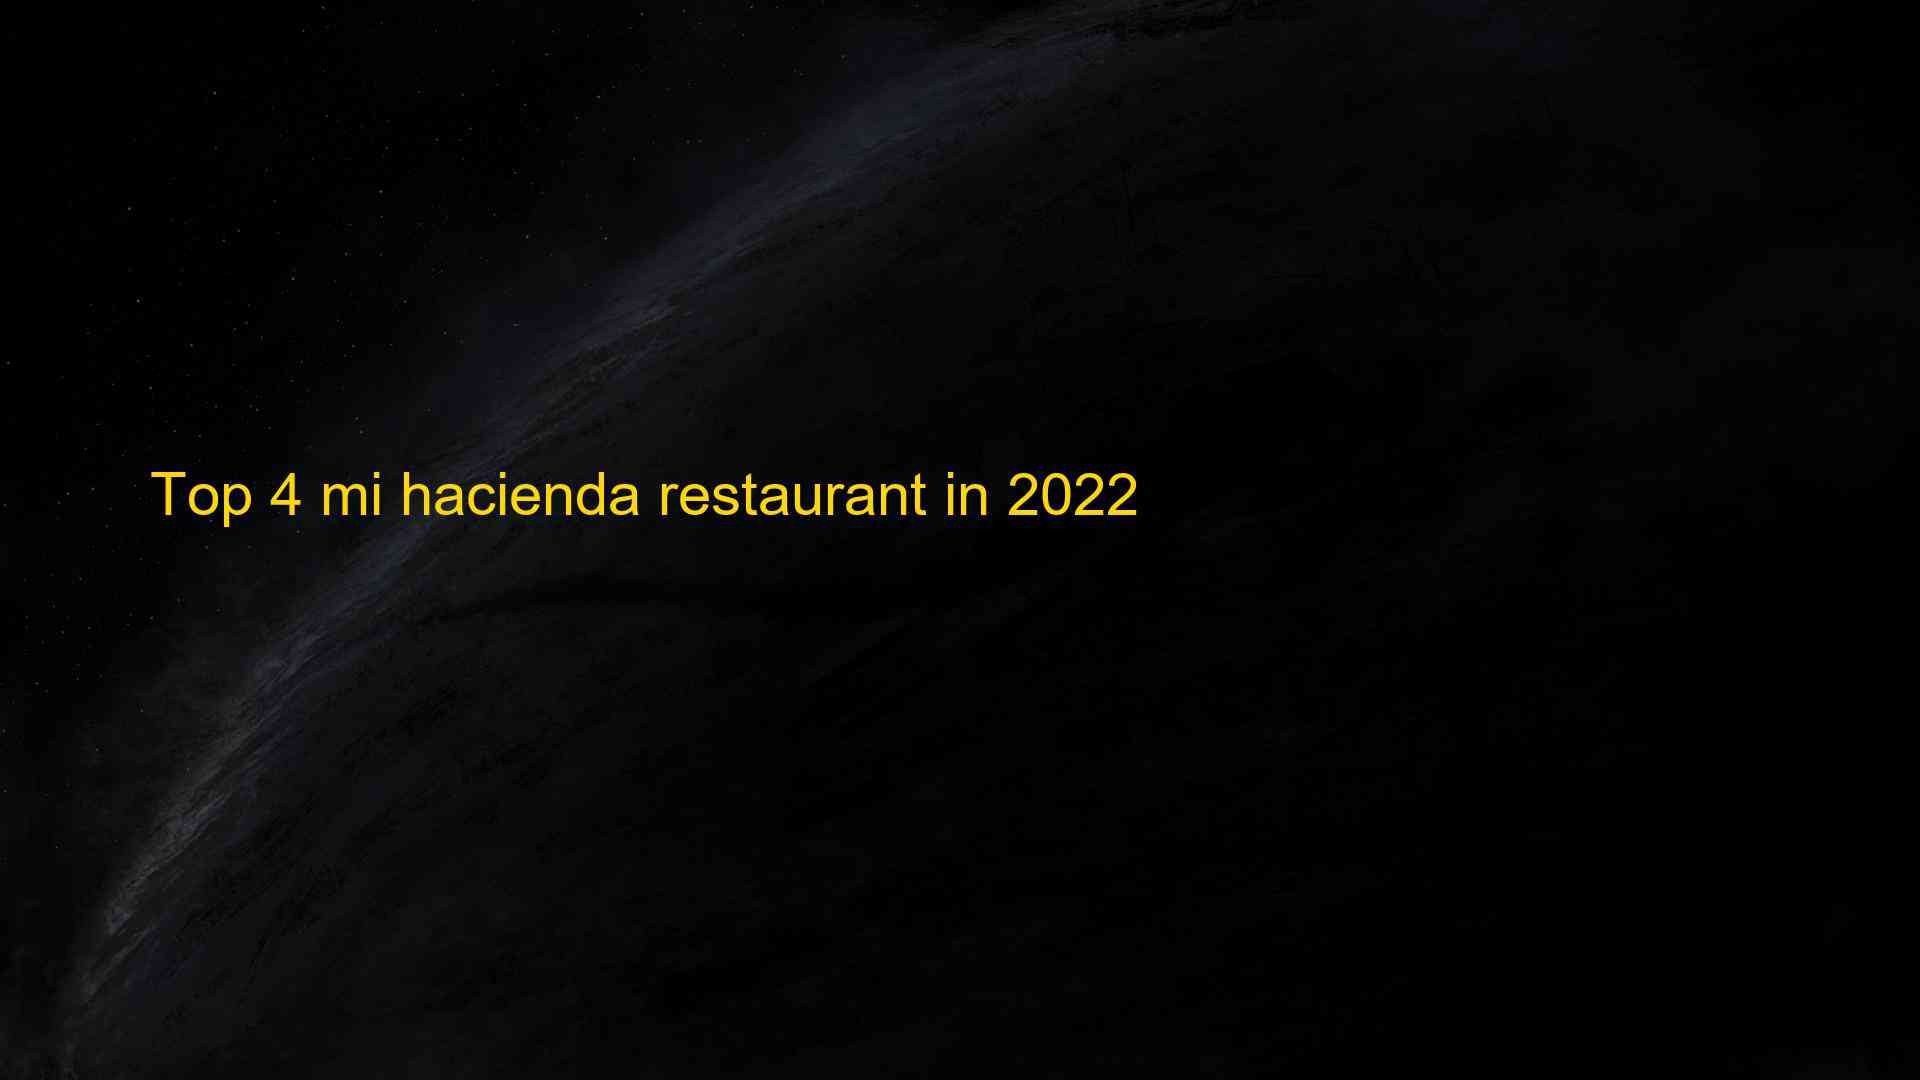 Top 4 mi hacienda restaurant in 2022 1663184946